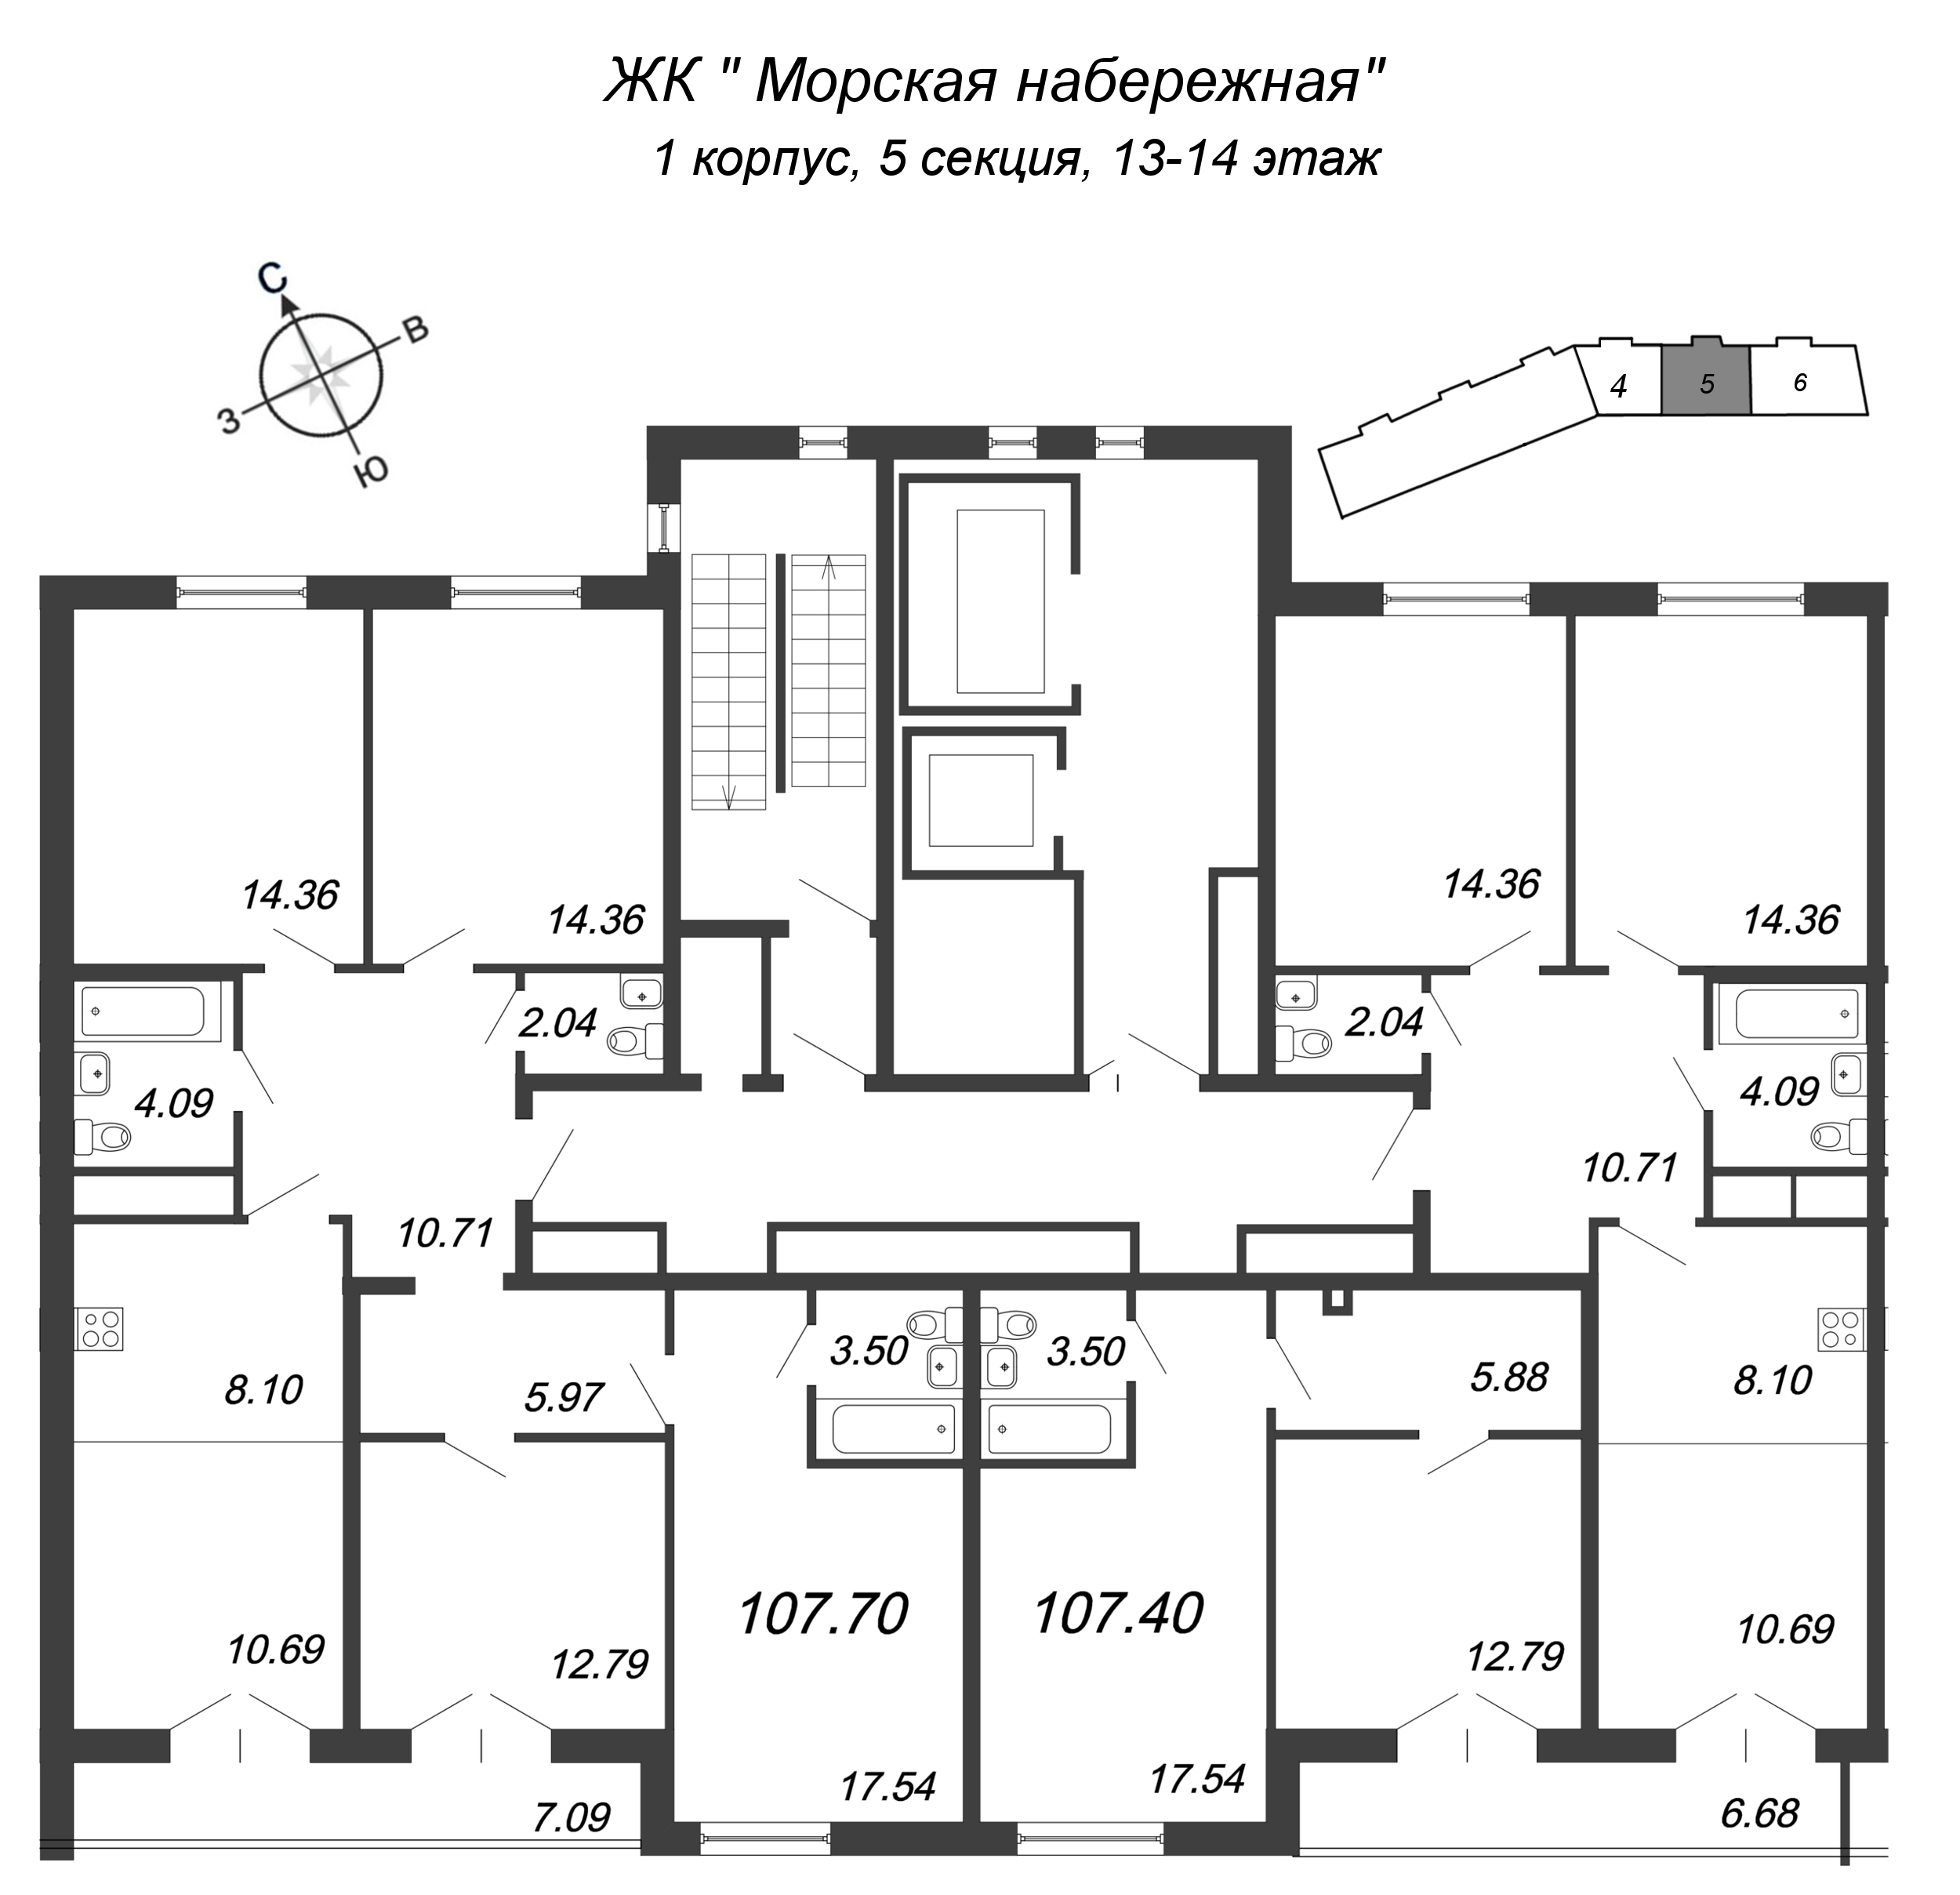 5-комнатная (Евро) квартира, 107.7 м² - планировка этажа